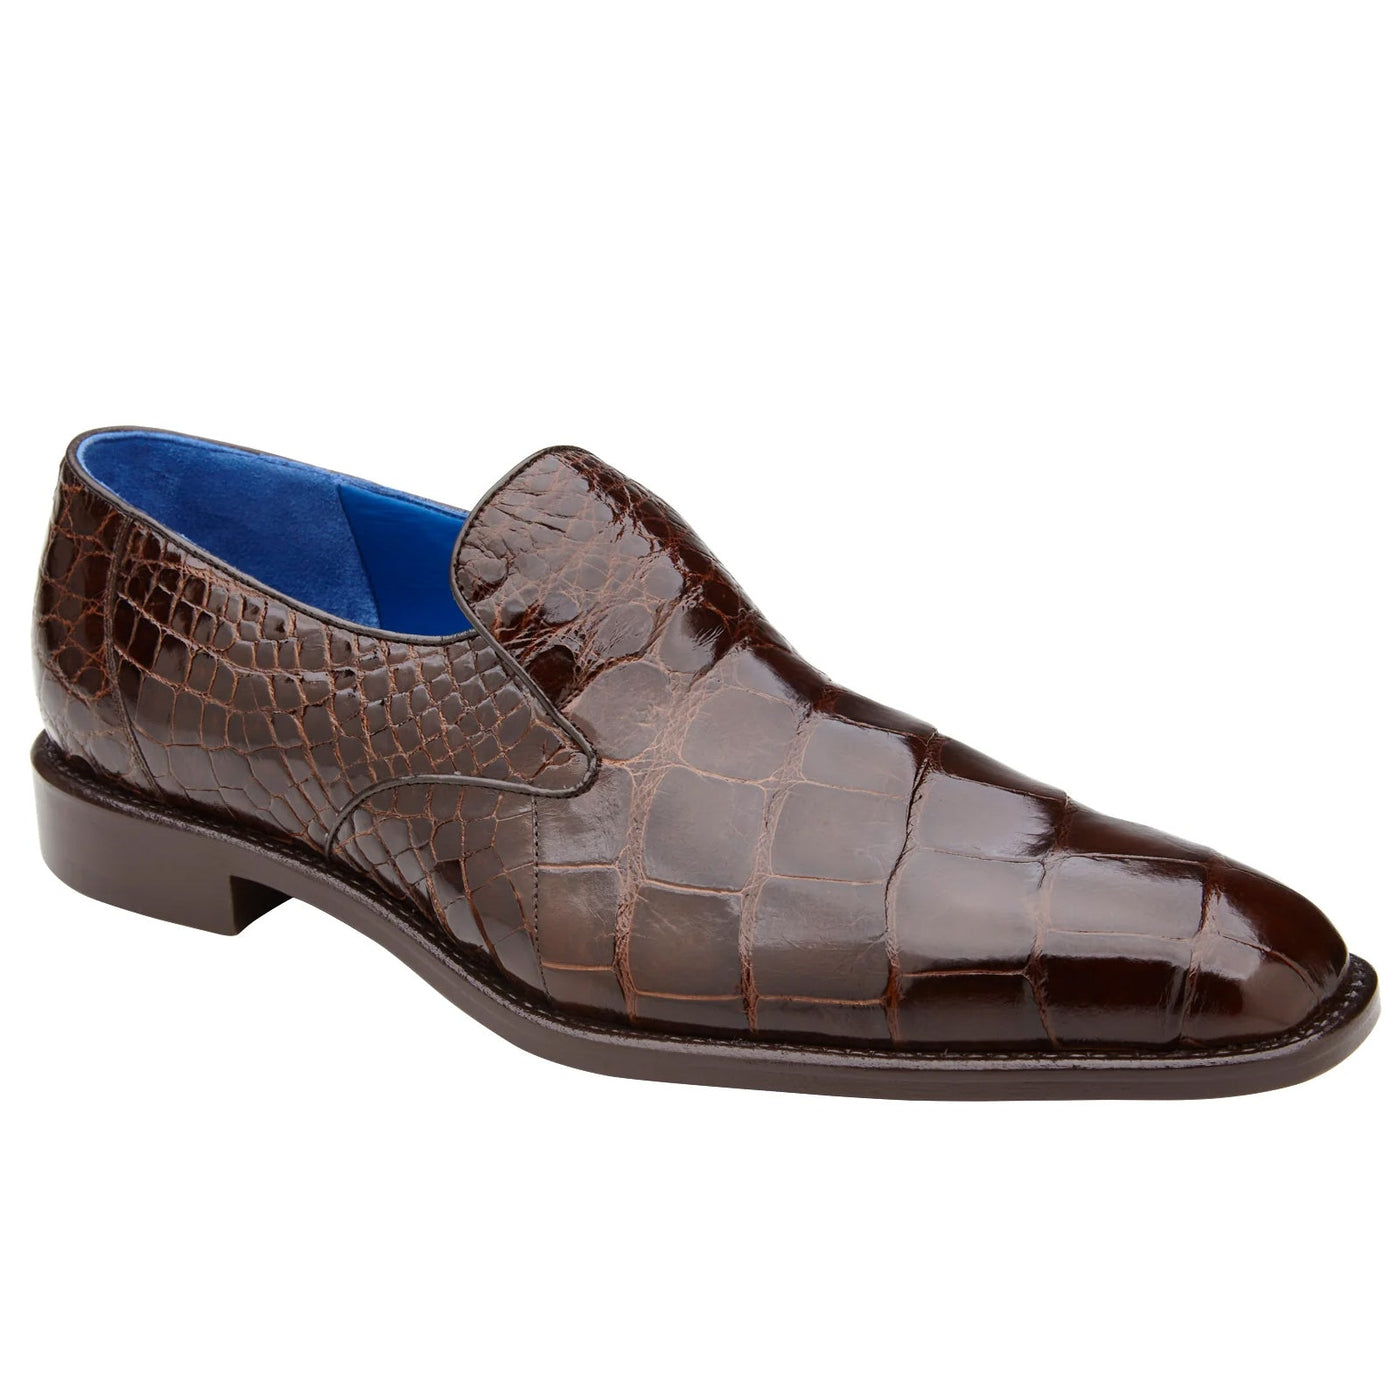 Men's Belvedere Genova Genuine Alligator Slip On Loafer Dress Shoe in Brown